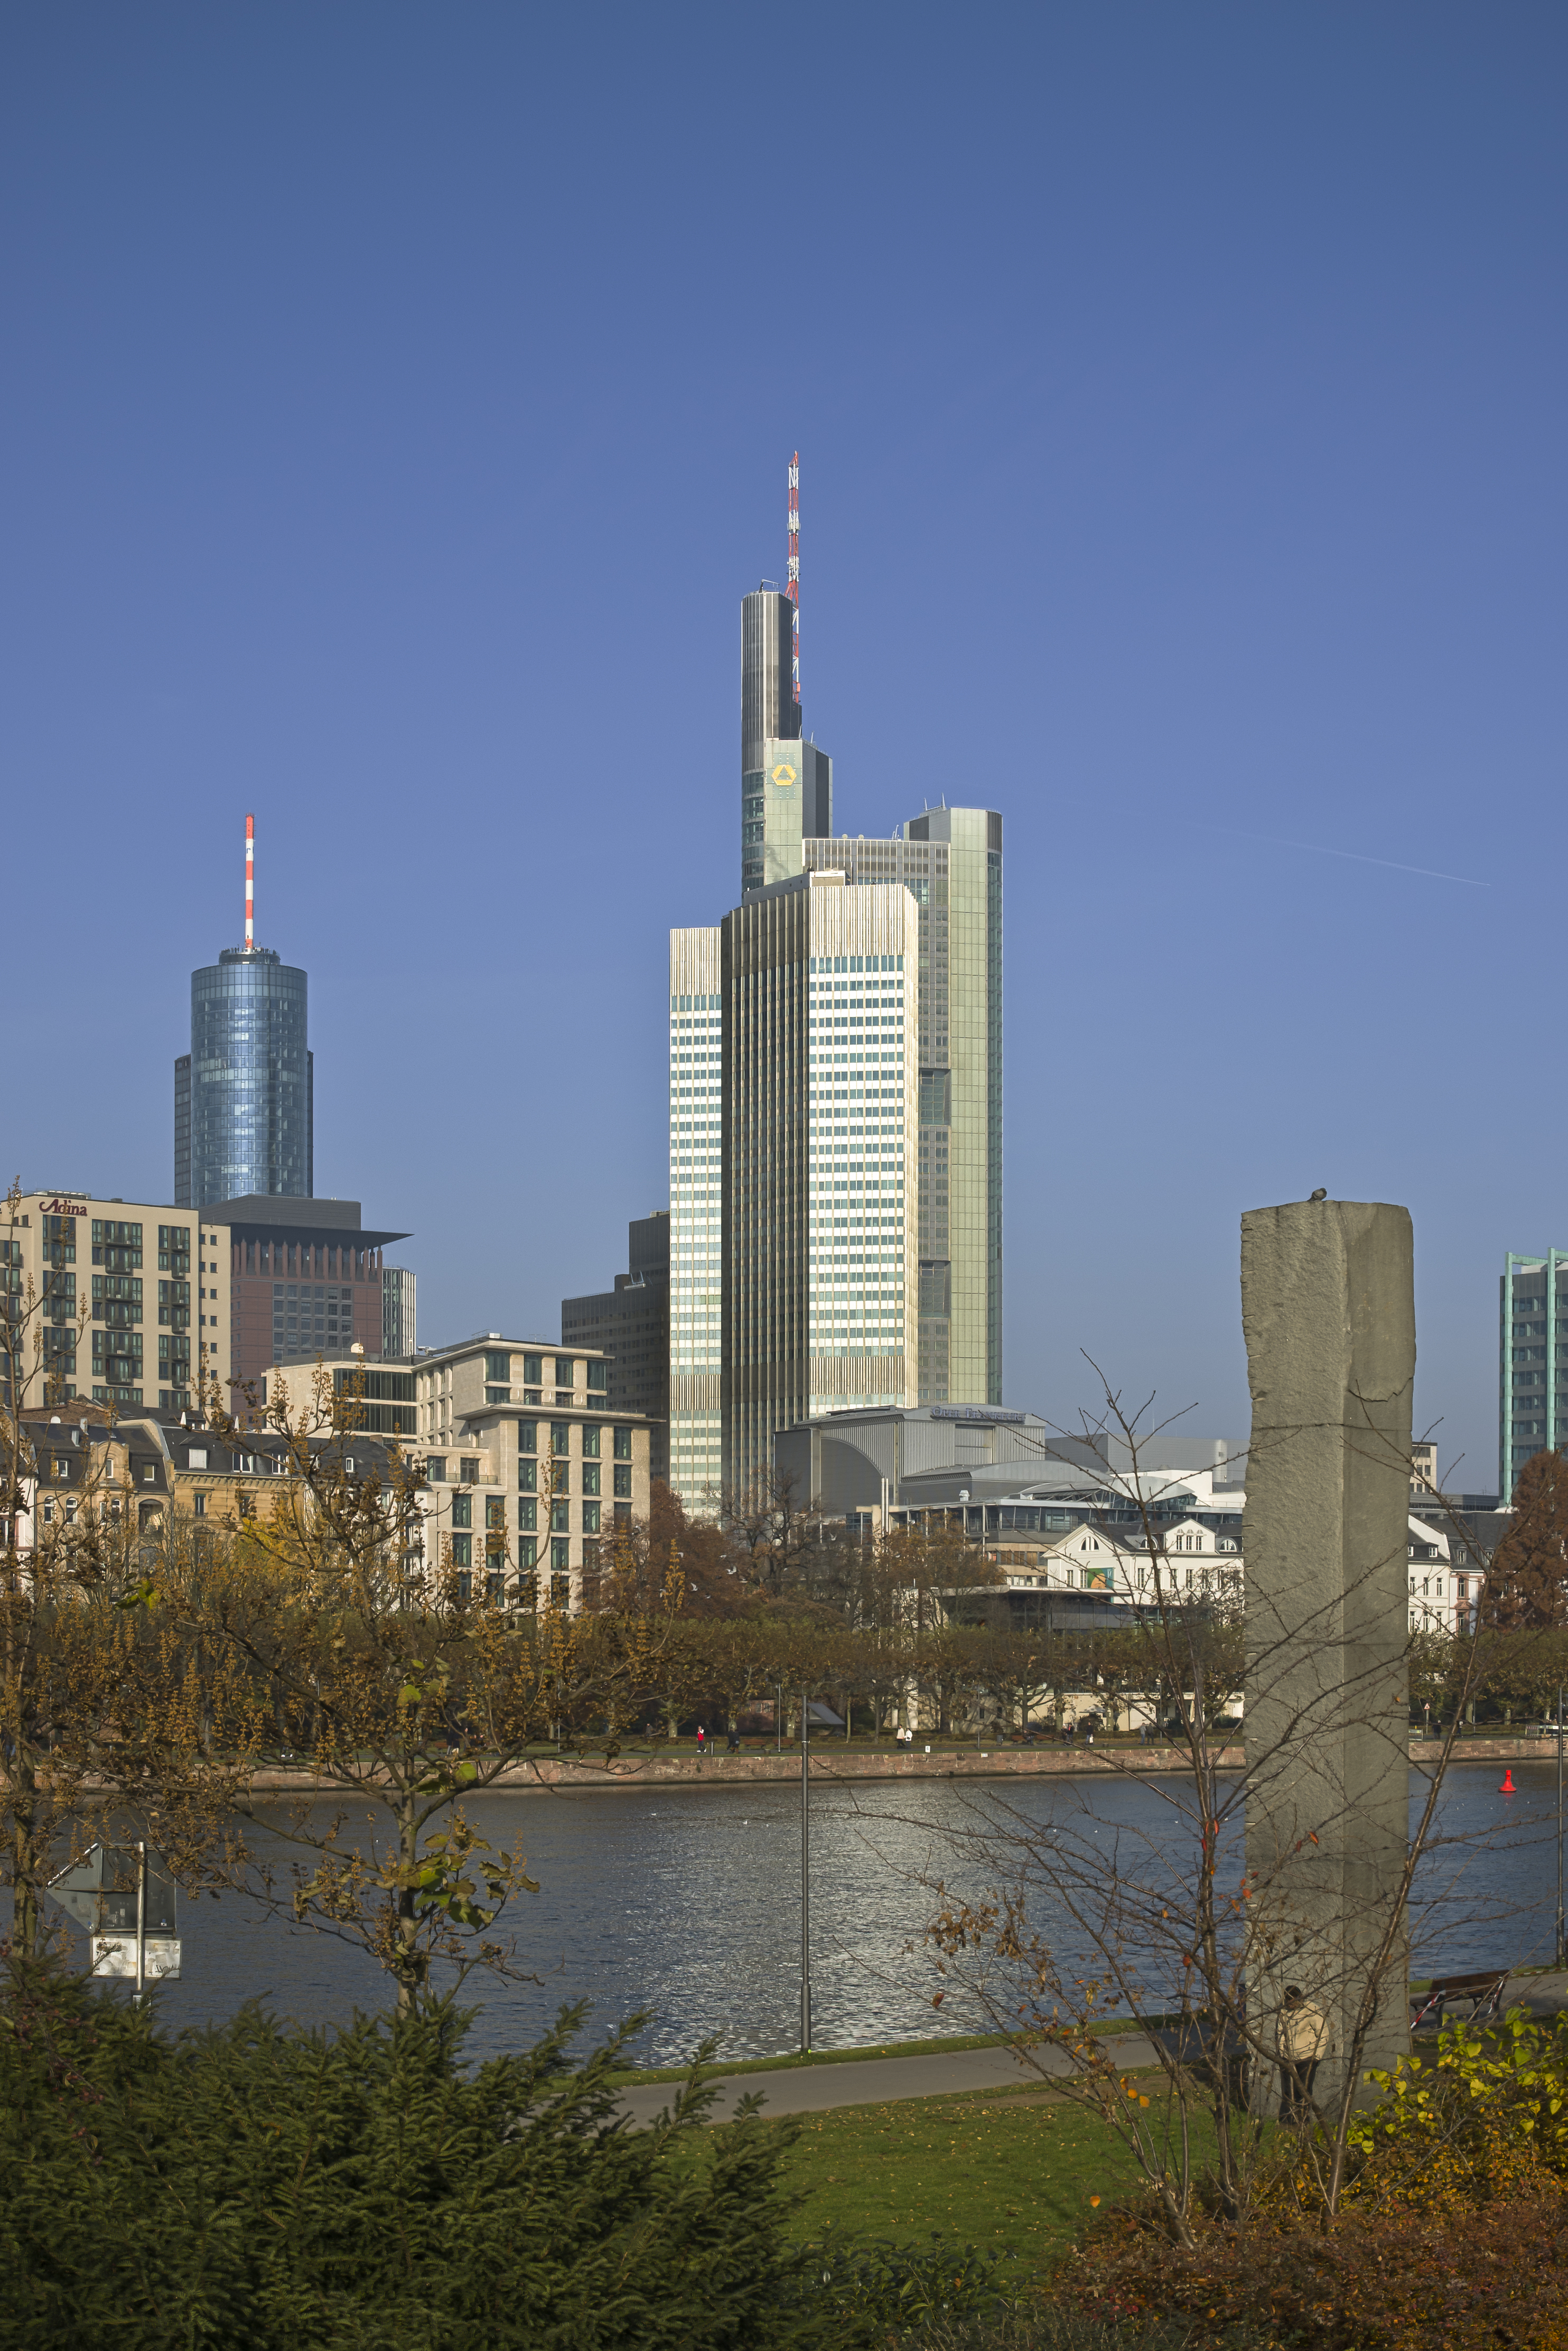 Frankfurt Main Skyline with Commerzbank Tower - 09